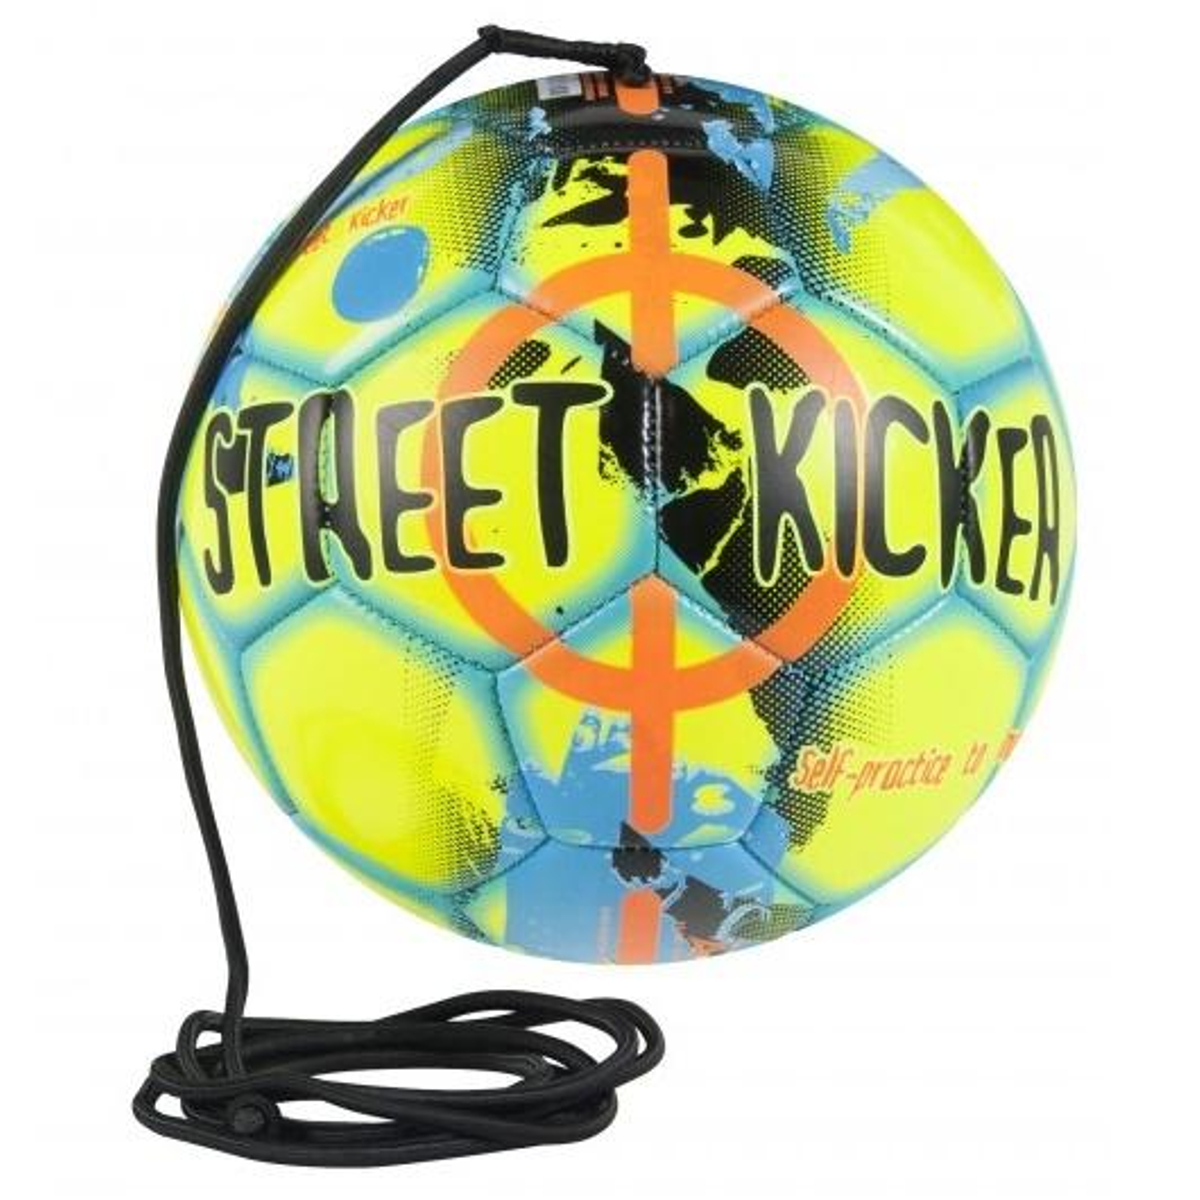 Select Street Kicker Voetbal